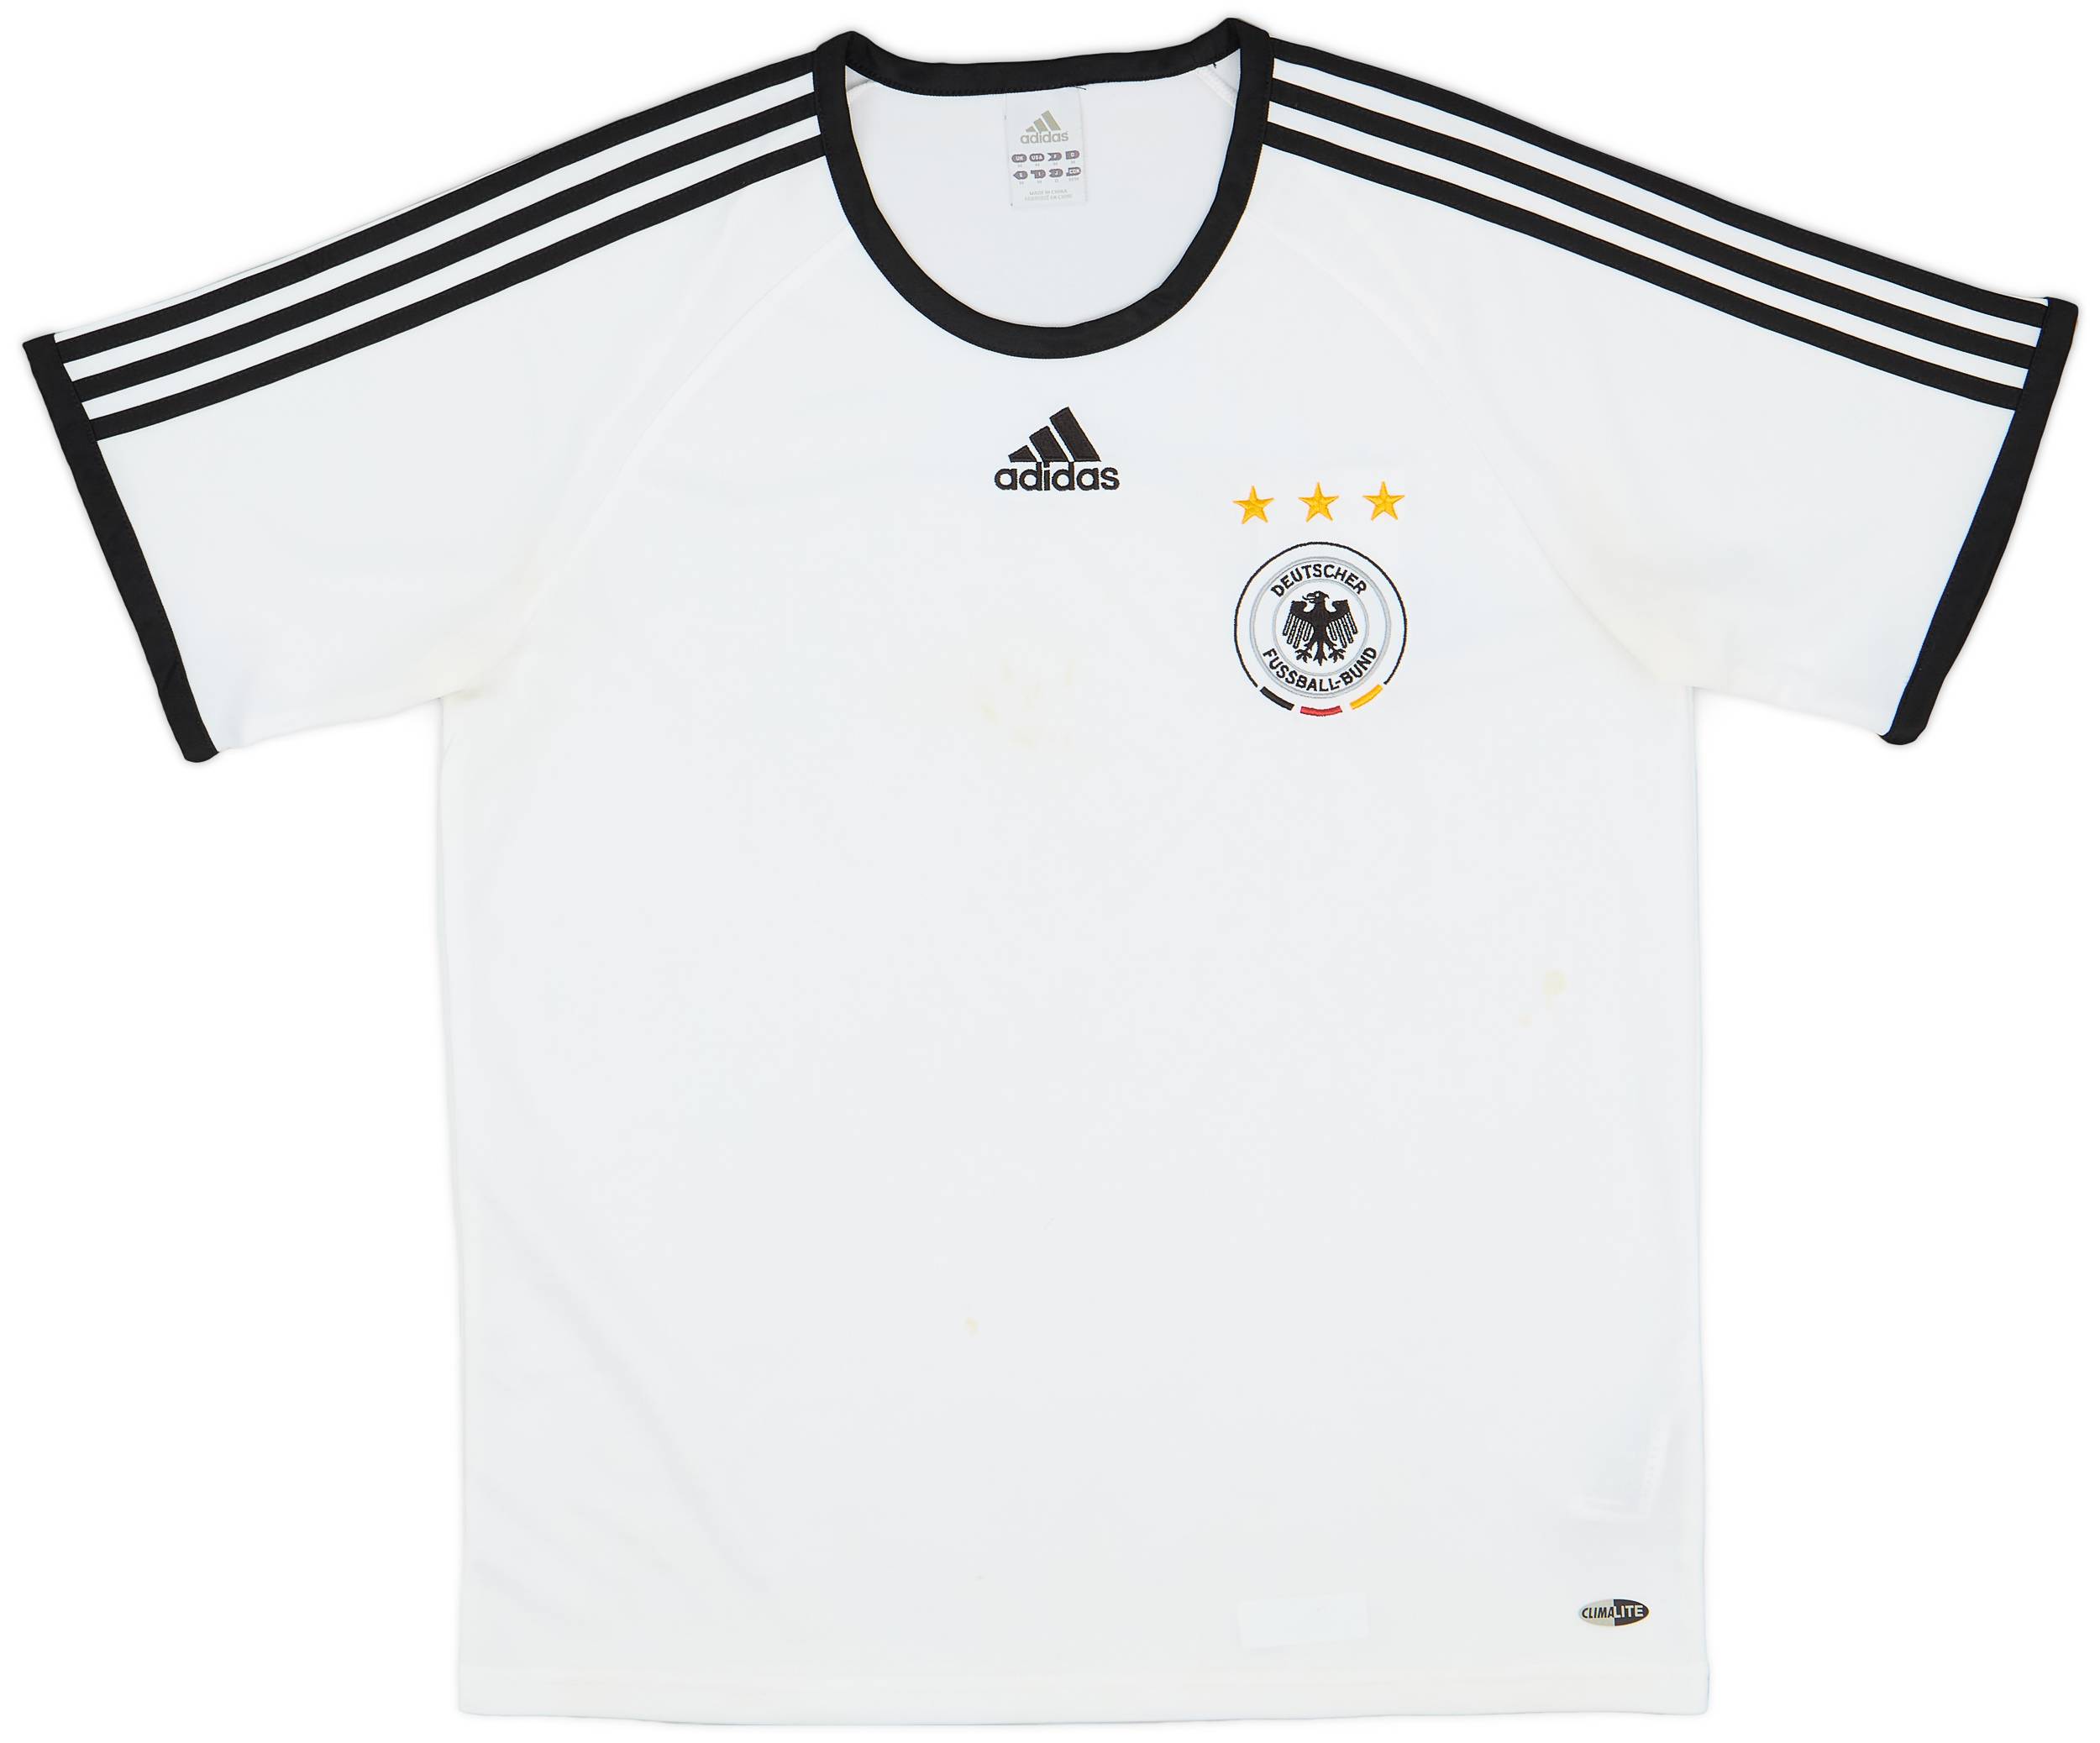 2005-07 Germany adidas Home Replica Shirt - 6/10 - (M)